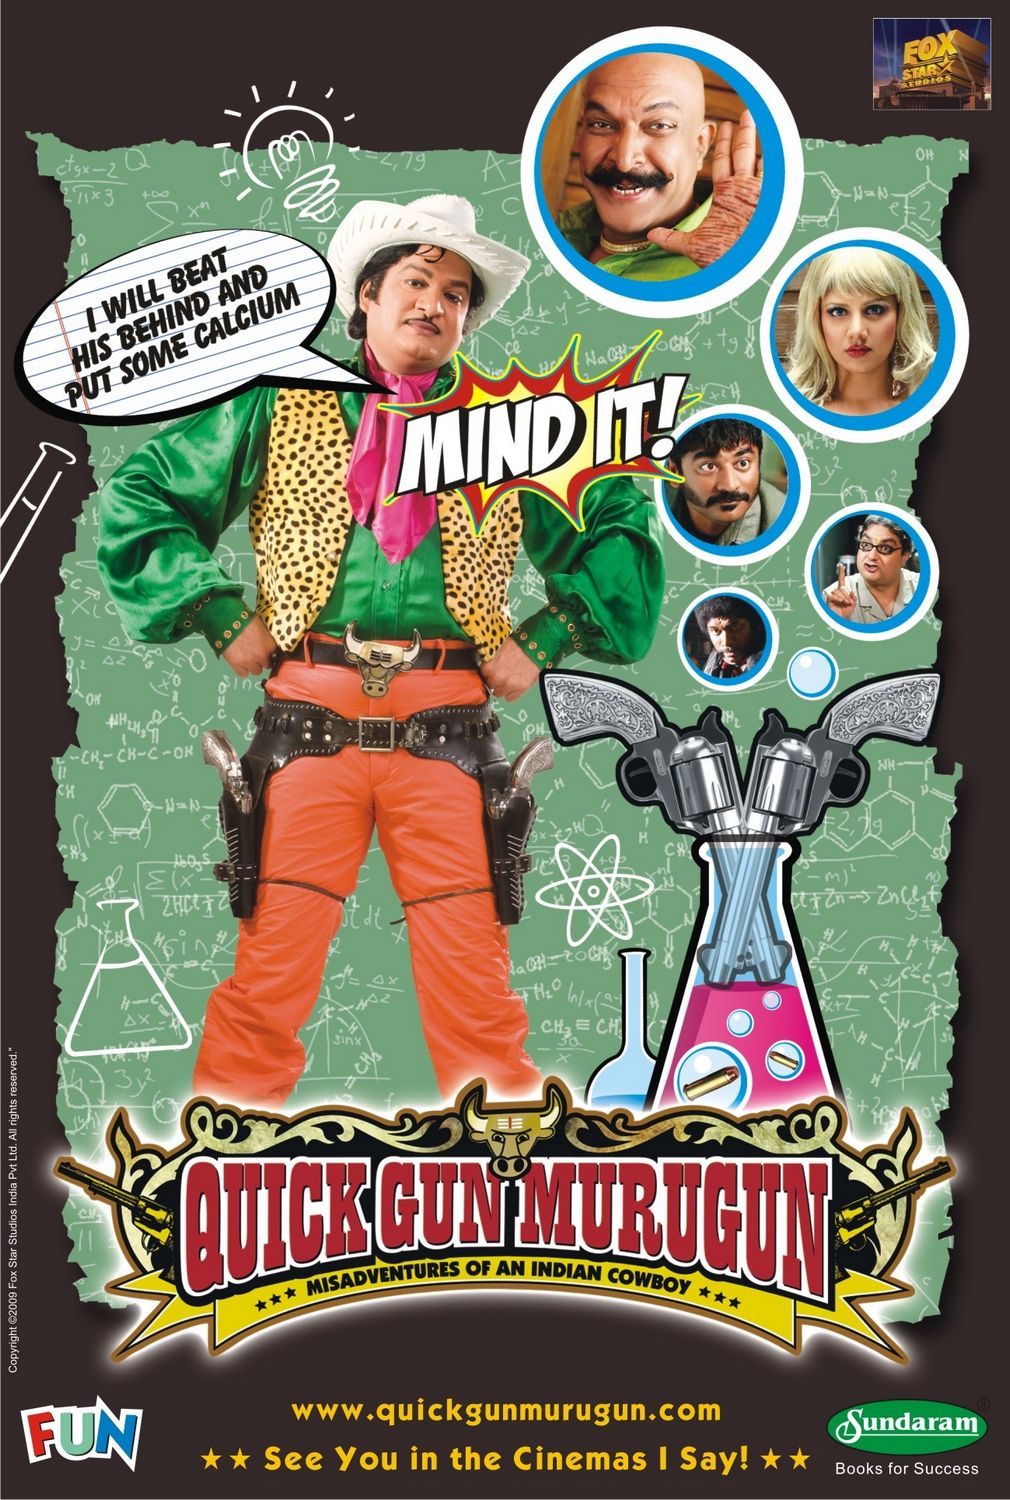 Extra Large Movie Poster Image for Quick Gun Murugun (#7 of 8)